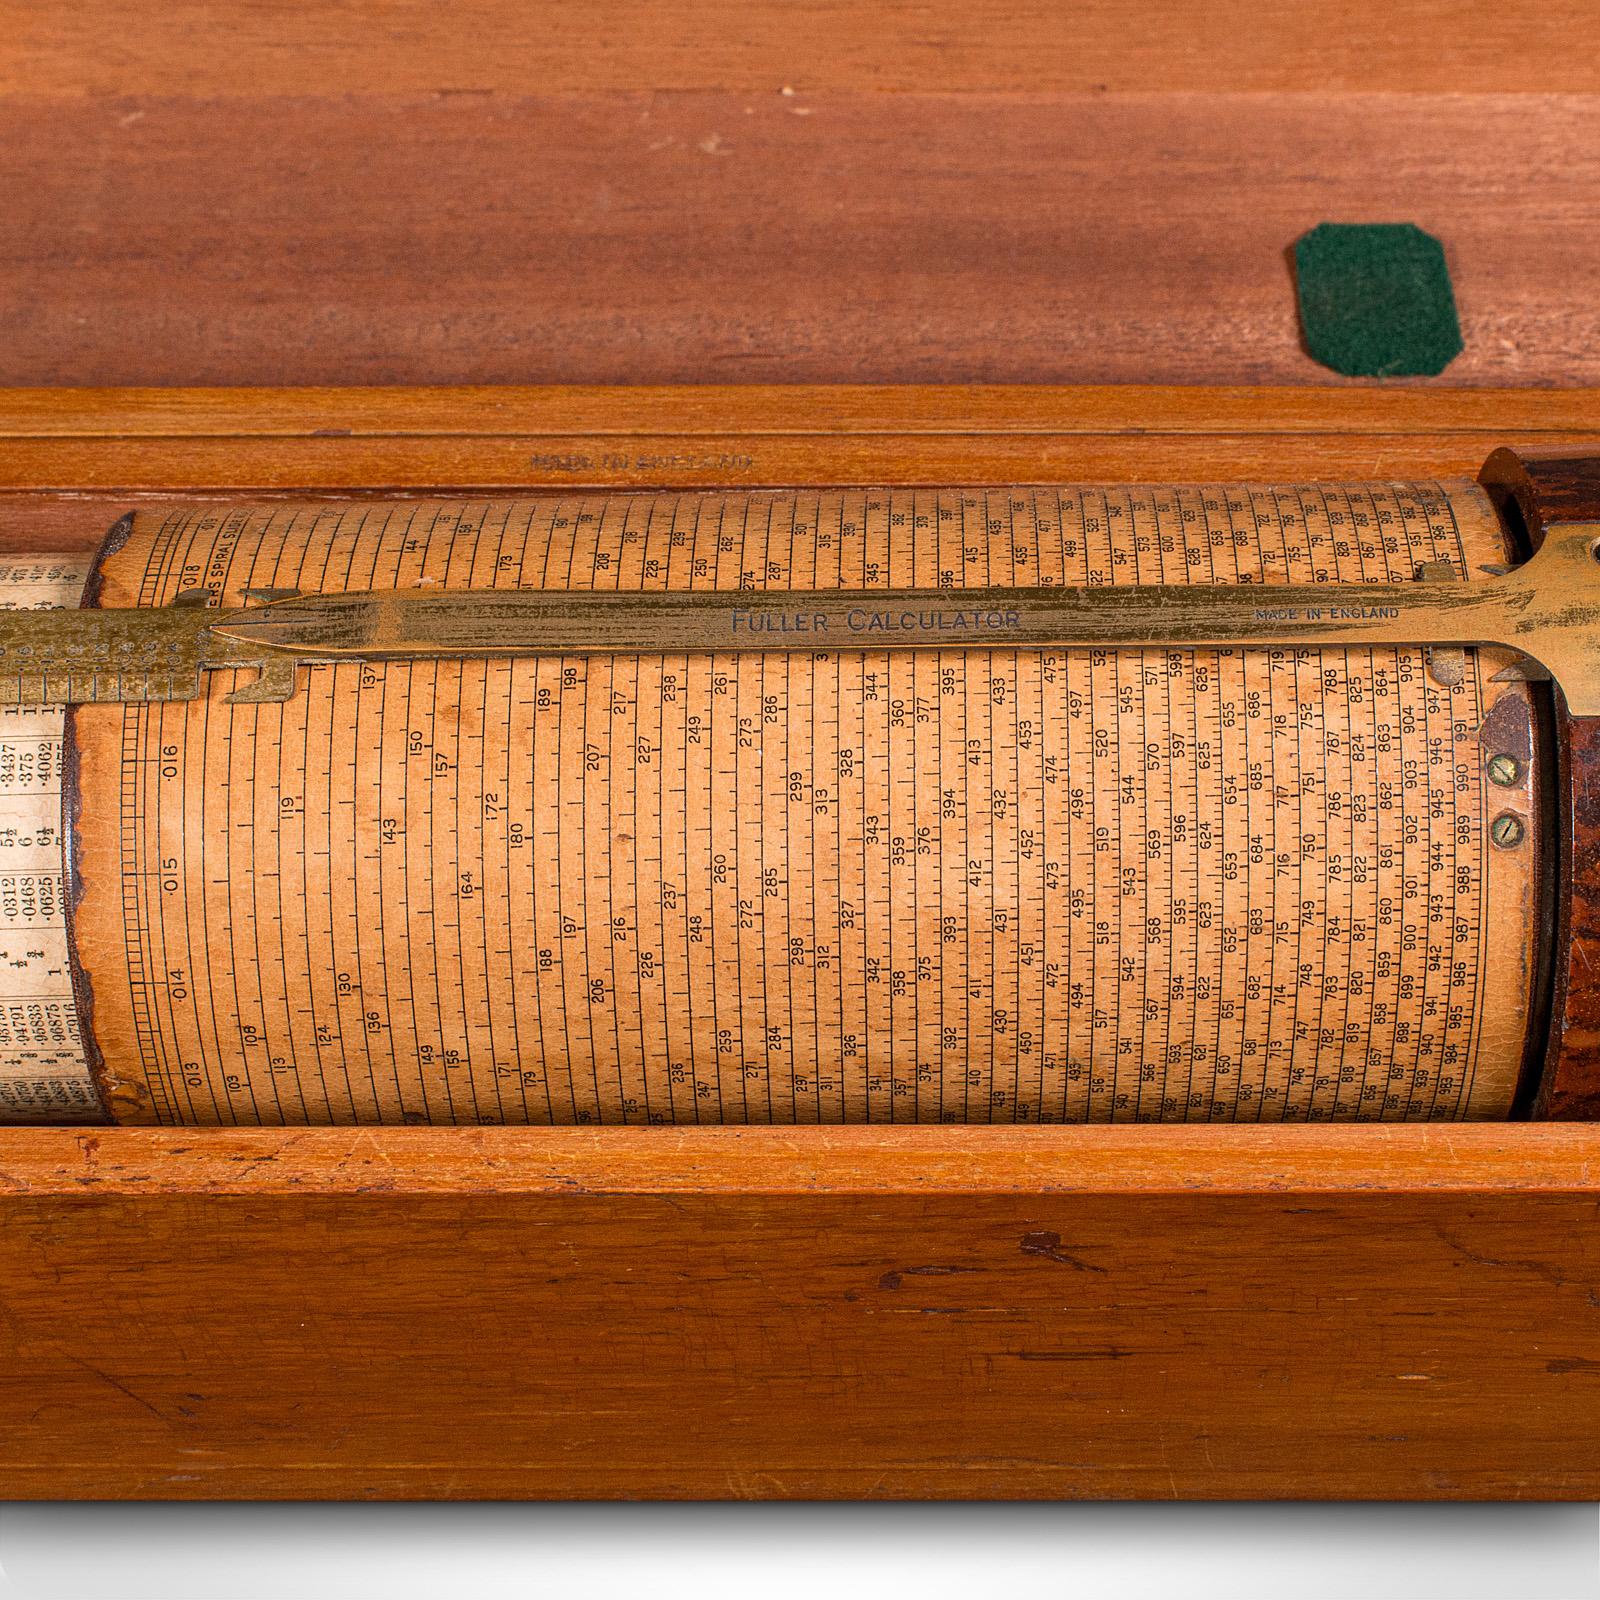 Vintage Fuller's Calculator, English, Walnut Case, Scientific Instrument, C.1950 For Sale 5